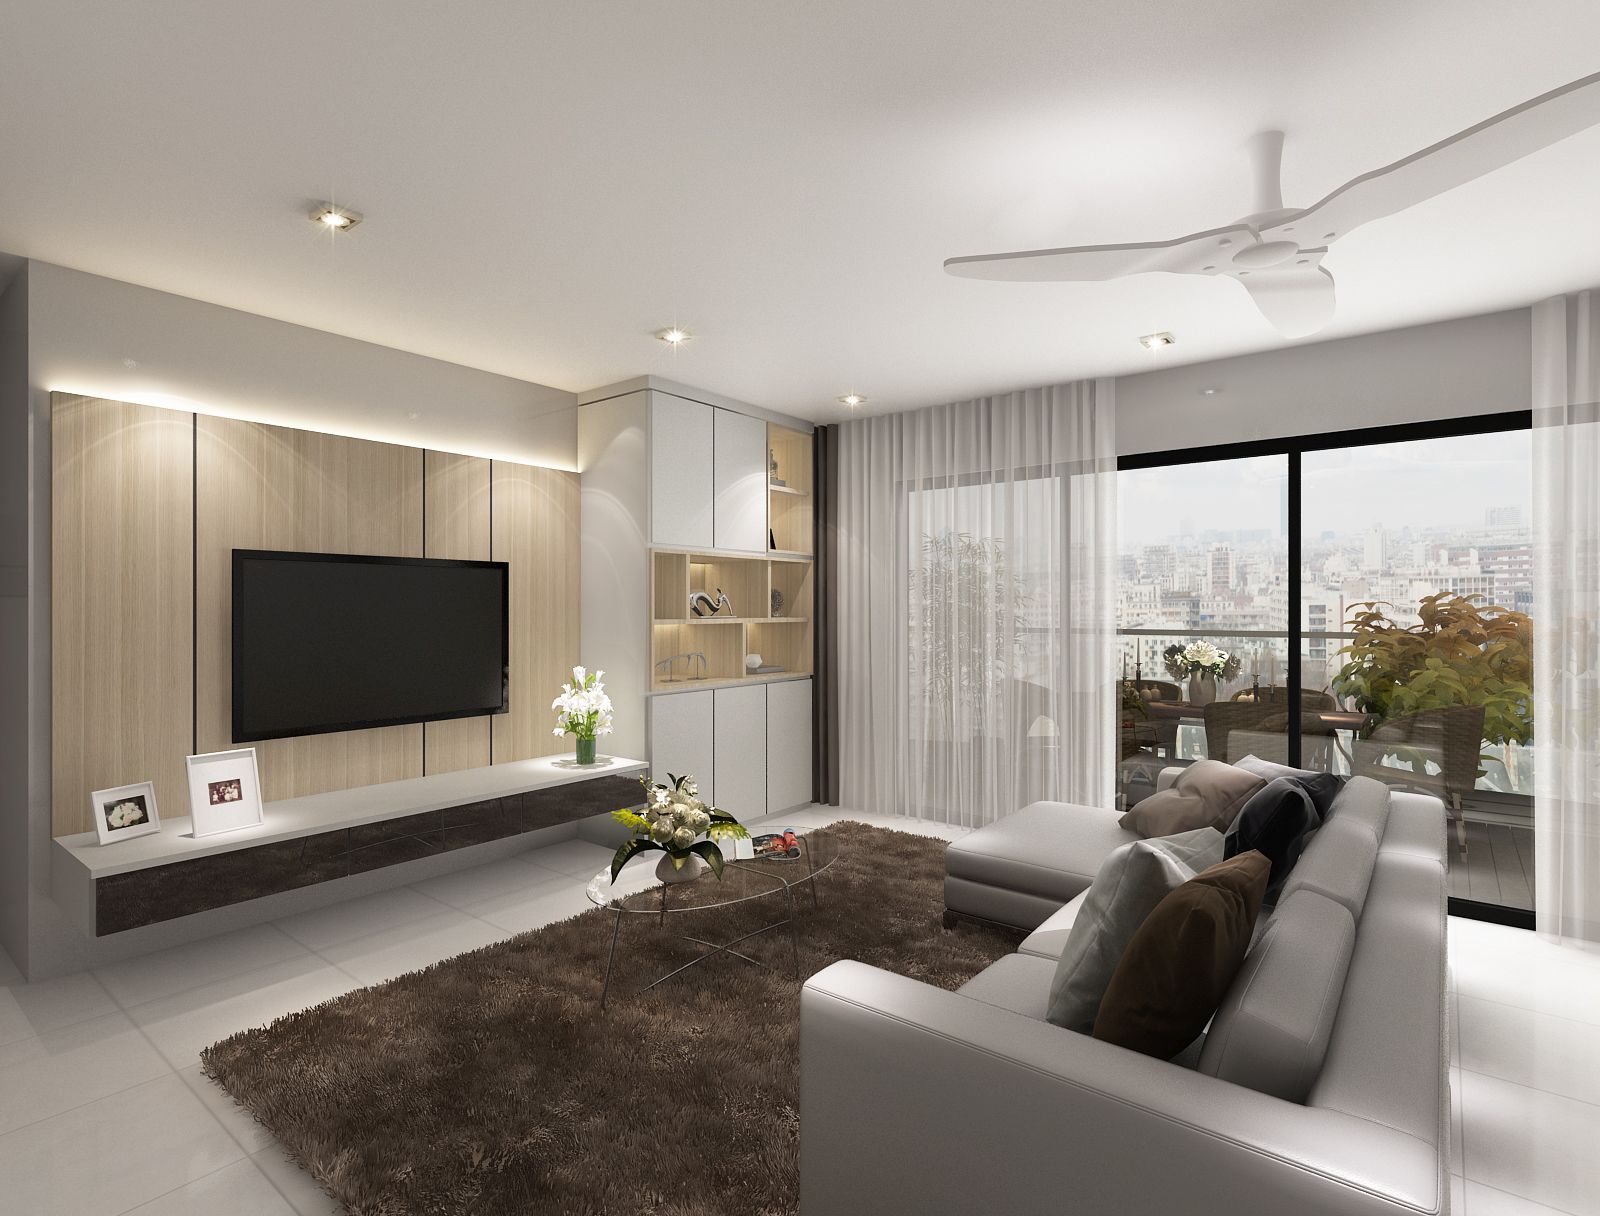 renovation idea modern luxury living room bright